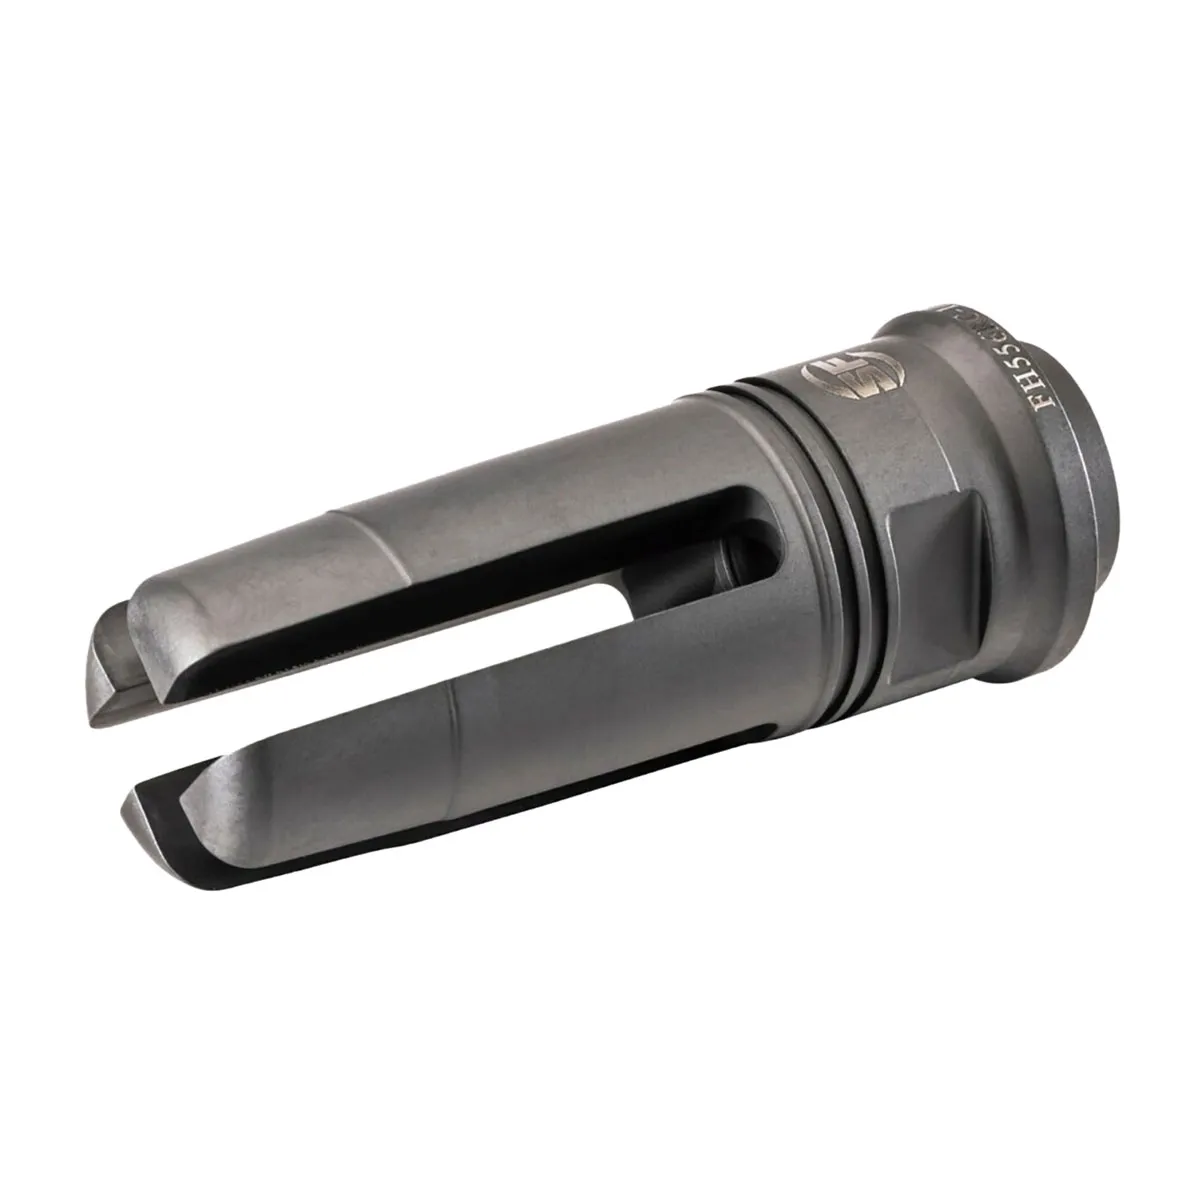 SUREFIRE SOCOM 4-Prong Flash Hider 5.56mm 1/2-28 Threads Black